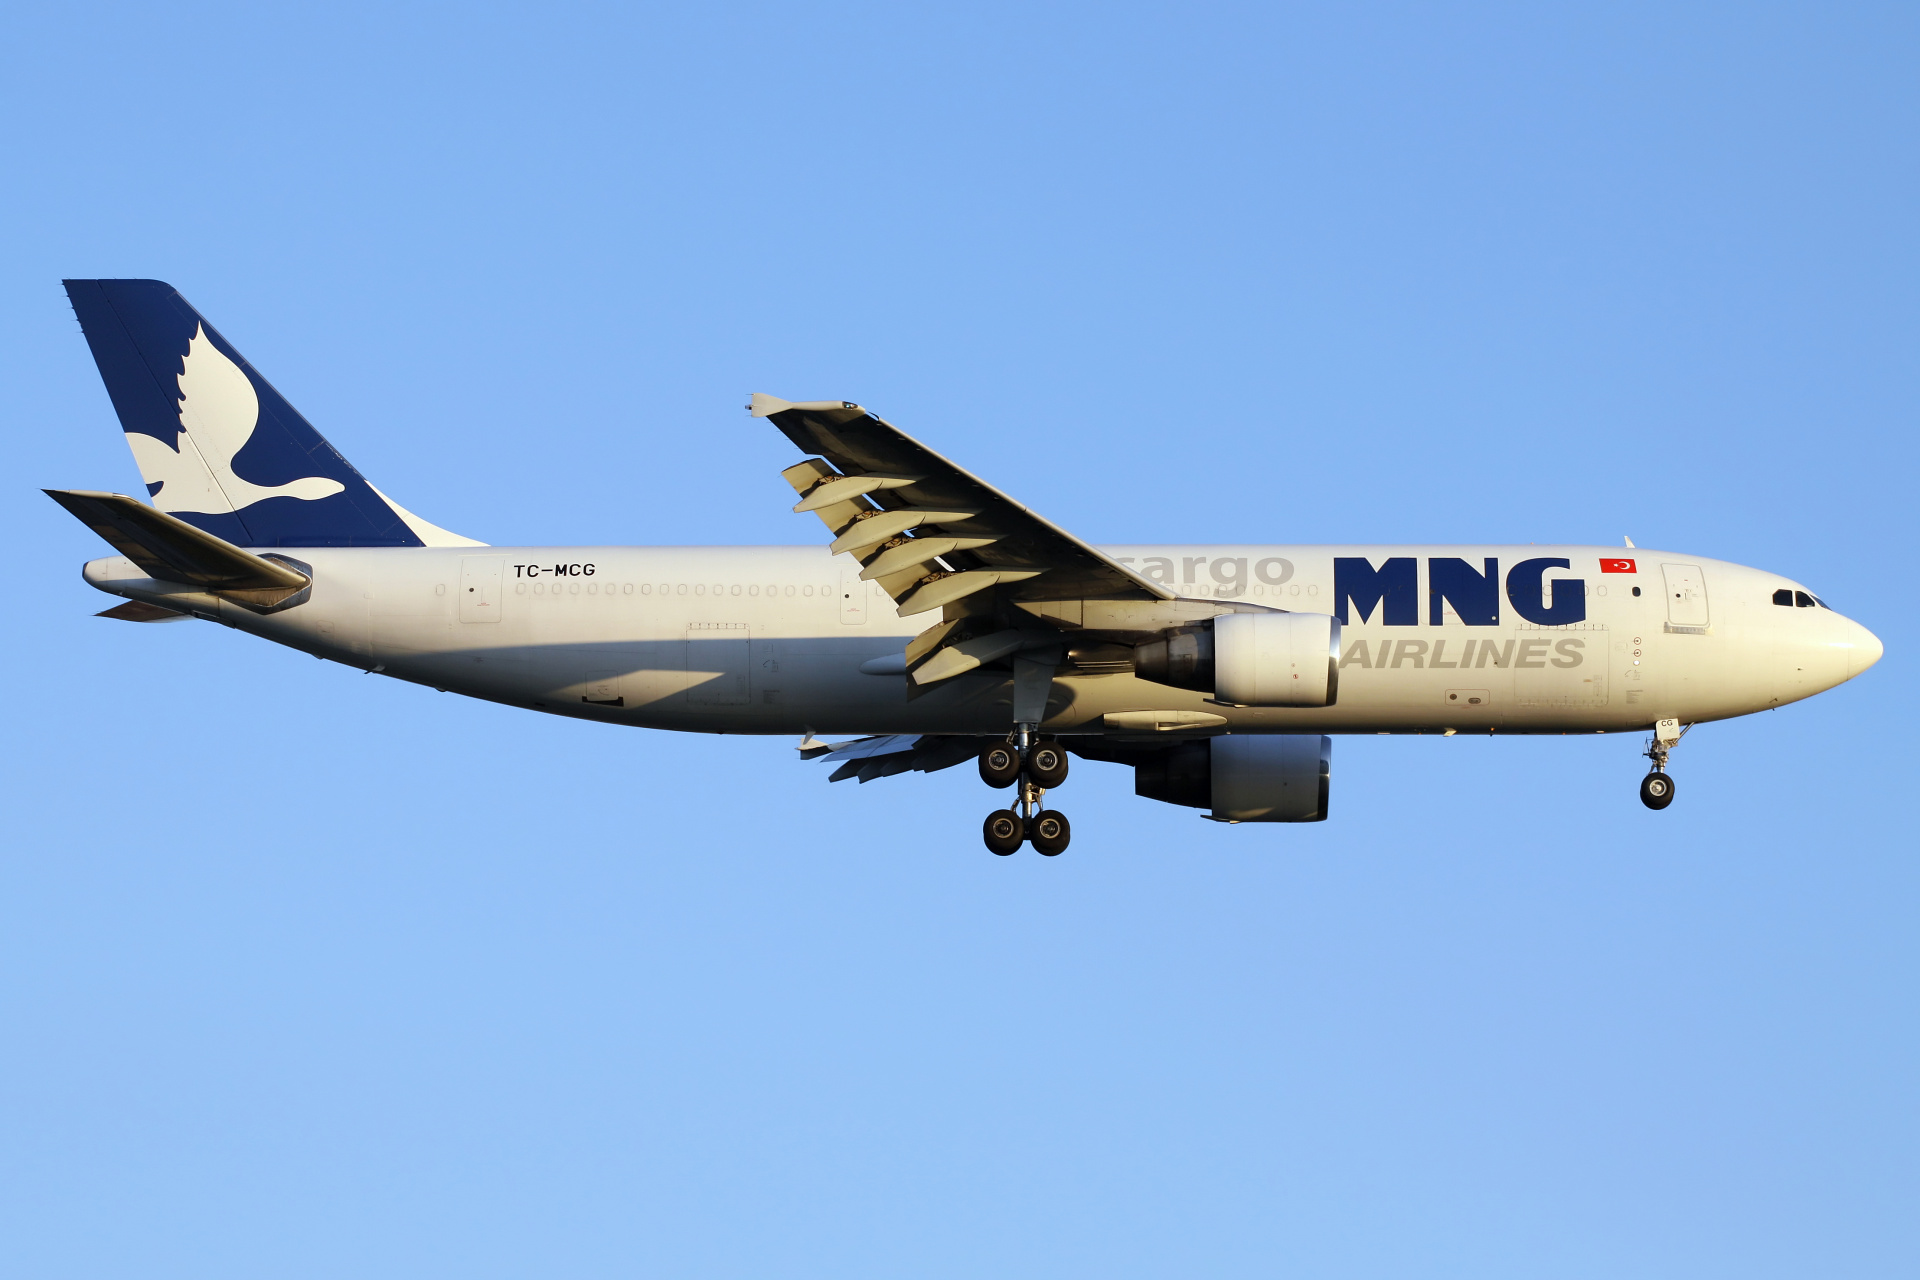 TC-MCG, MNG Airlines Cargo (Samoloty » Port Lotniczy im. Atatürka w Stambule » Airbus A300B4-600F)